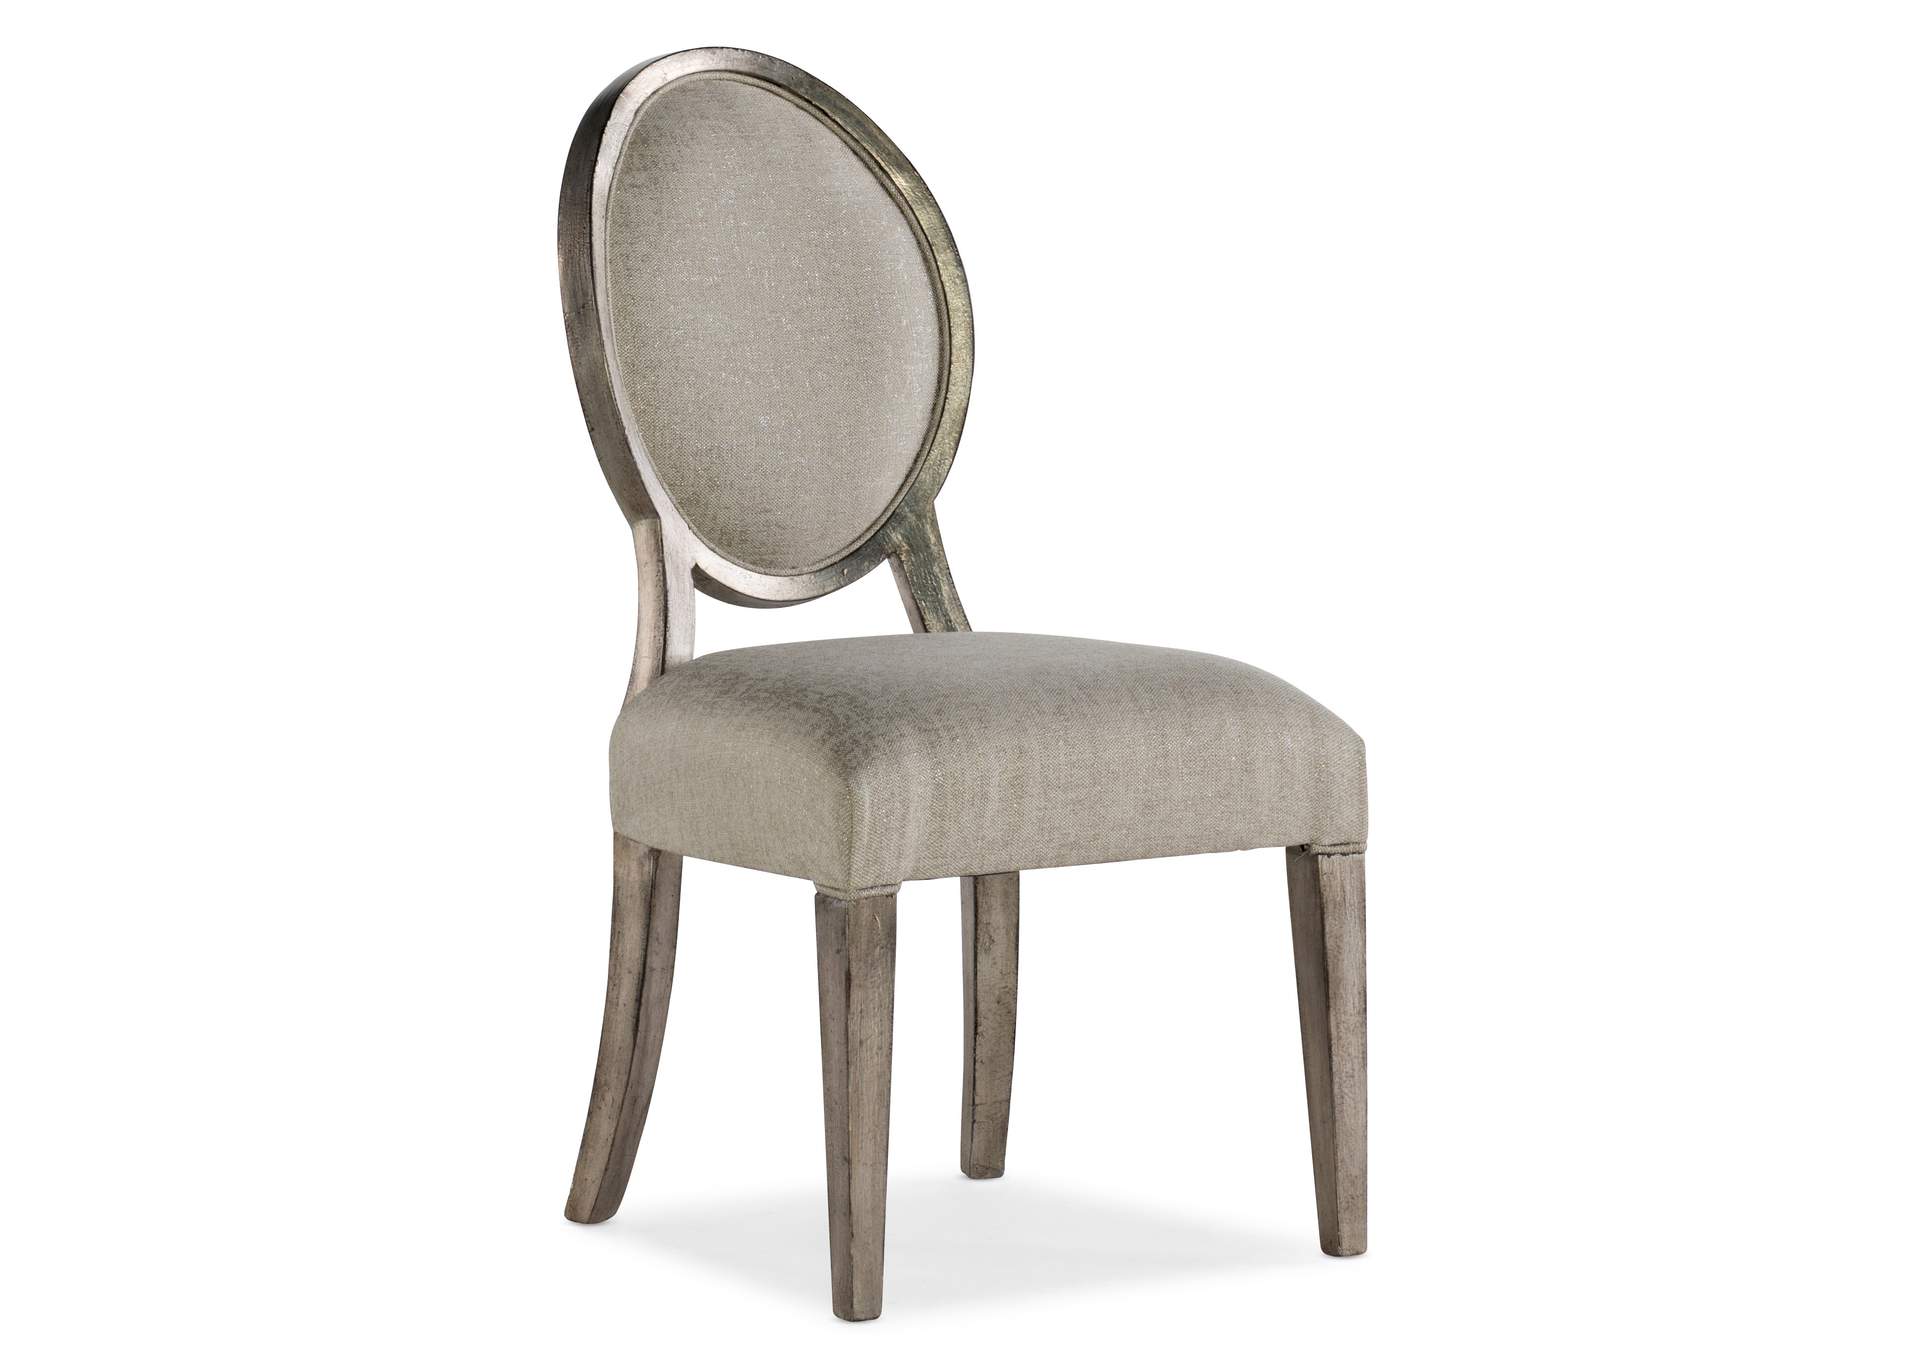 Sanctuary Romantique Oval Side Chair - 2 per carton/price ea